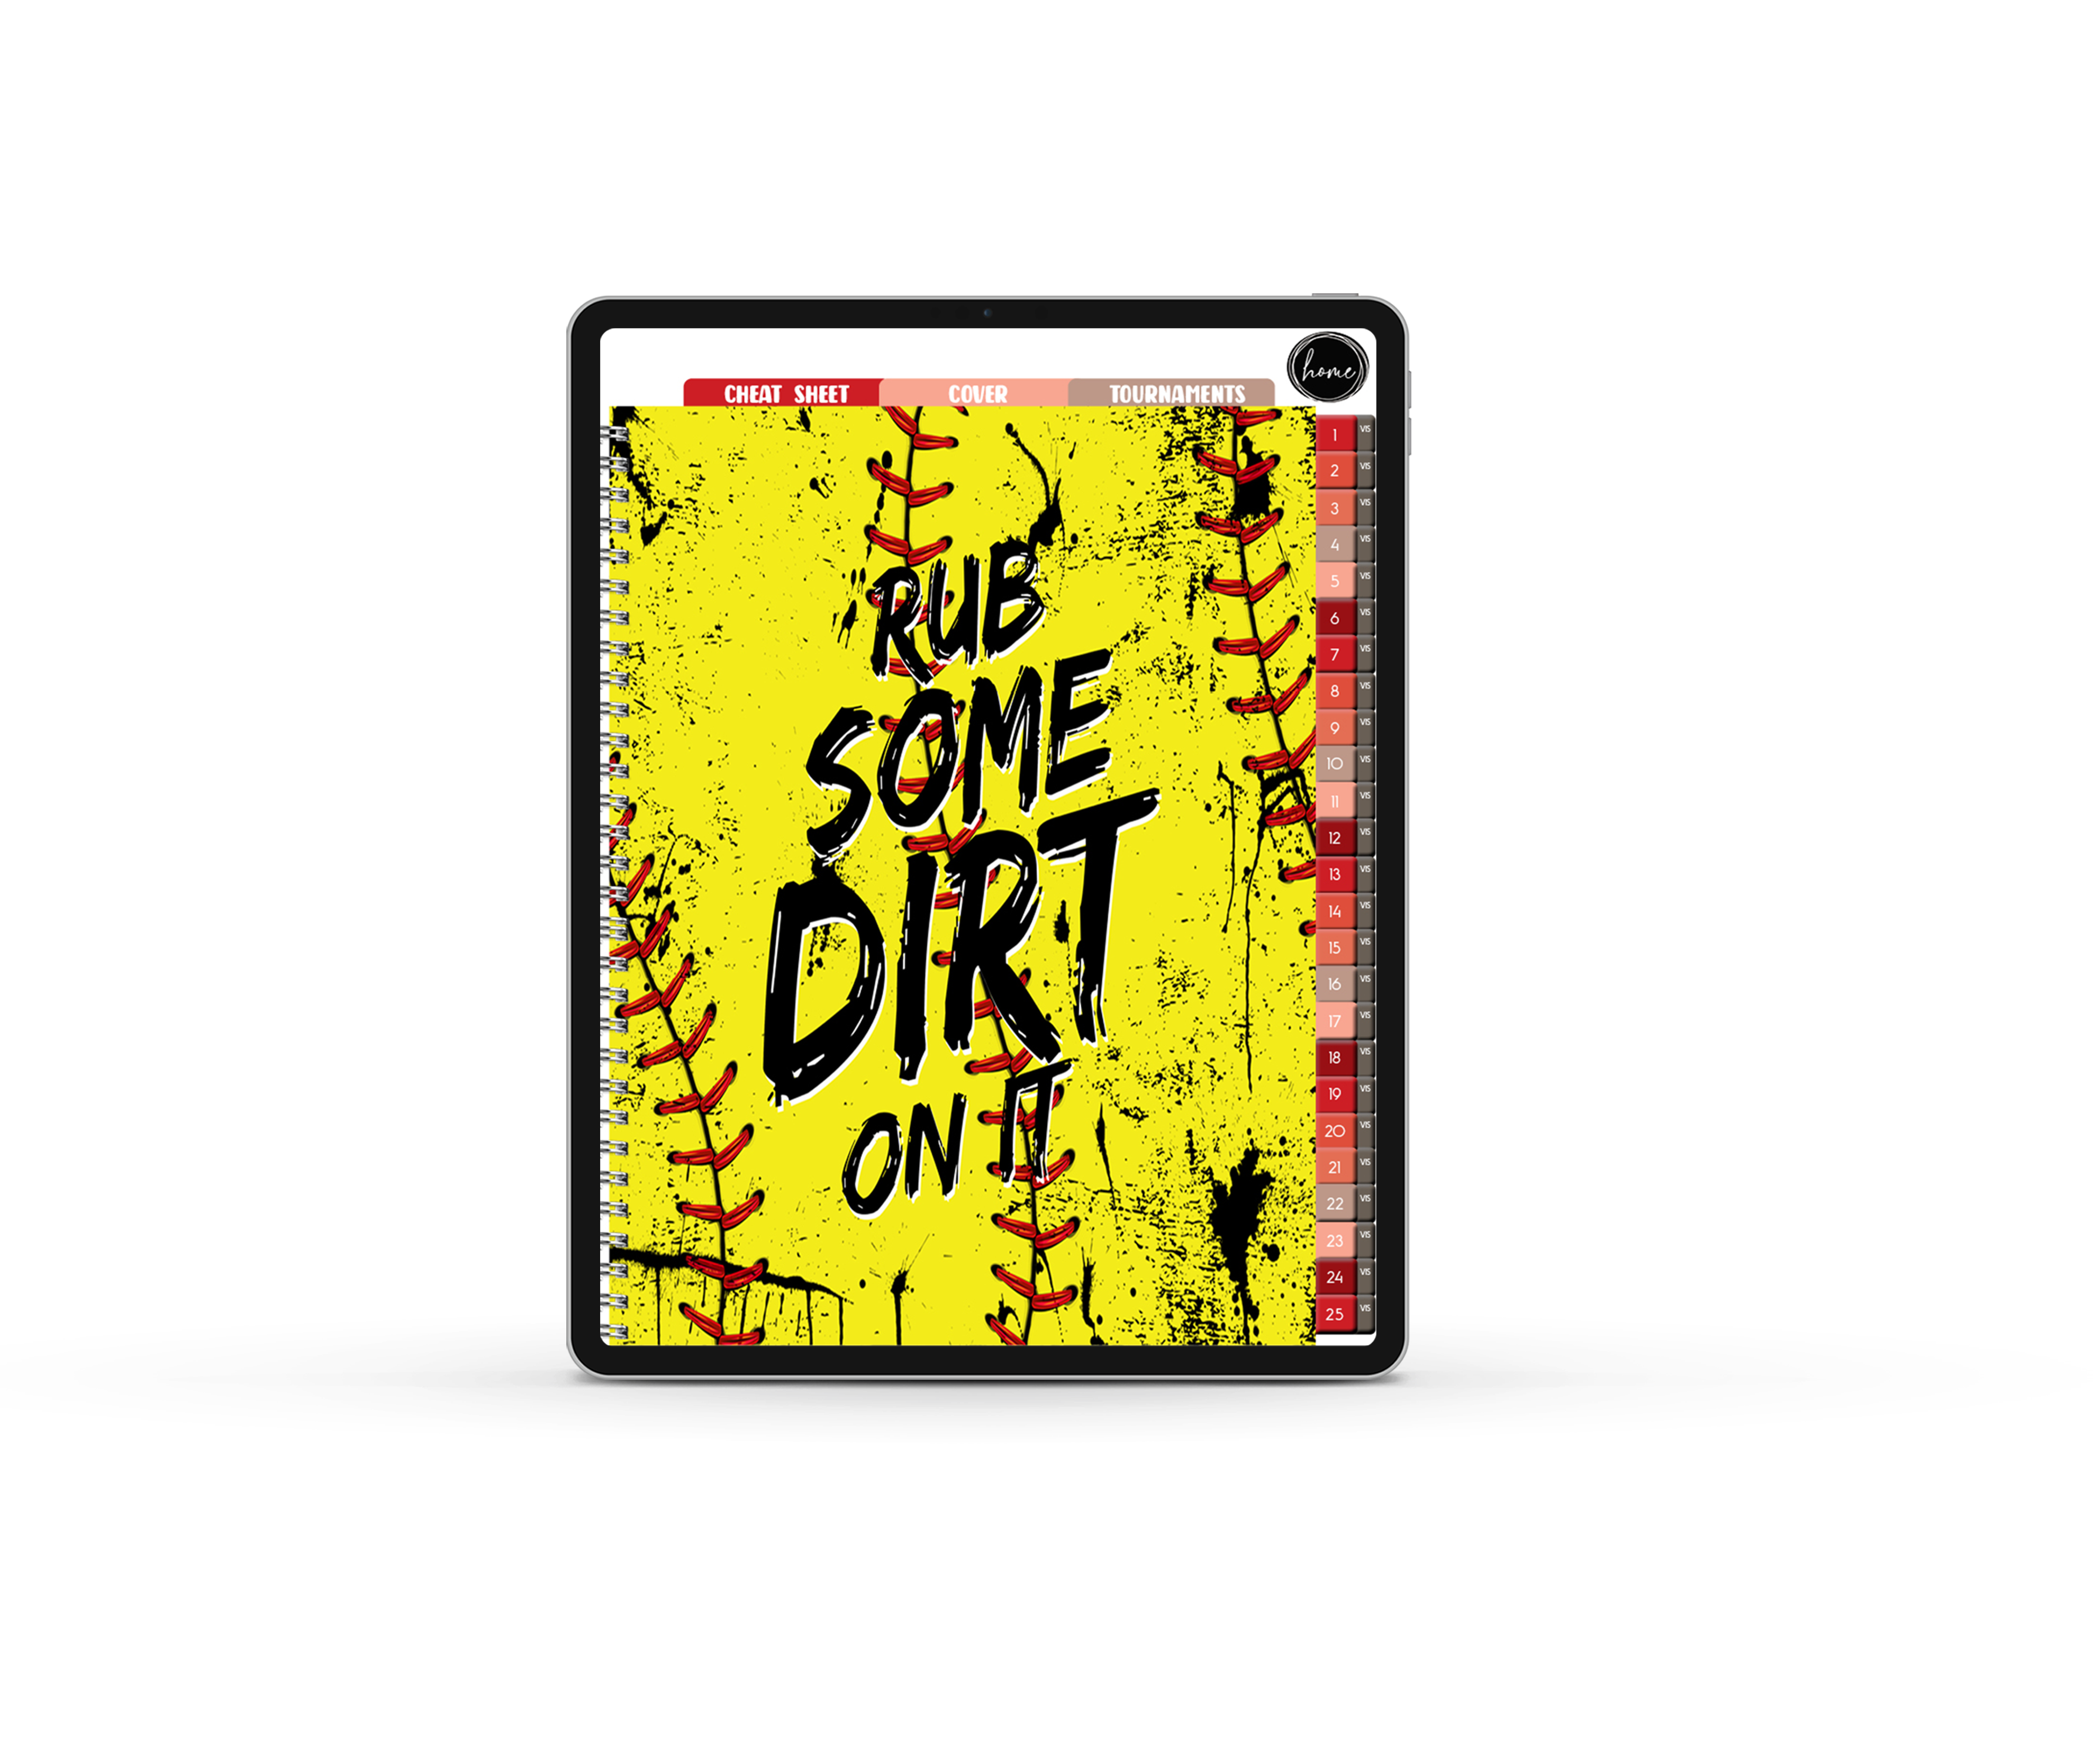 Digital Softball Scorebook  - RUB SOME DIRT